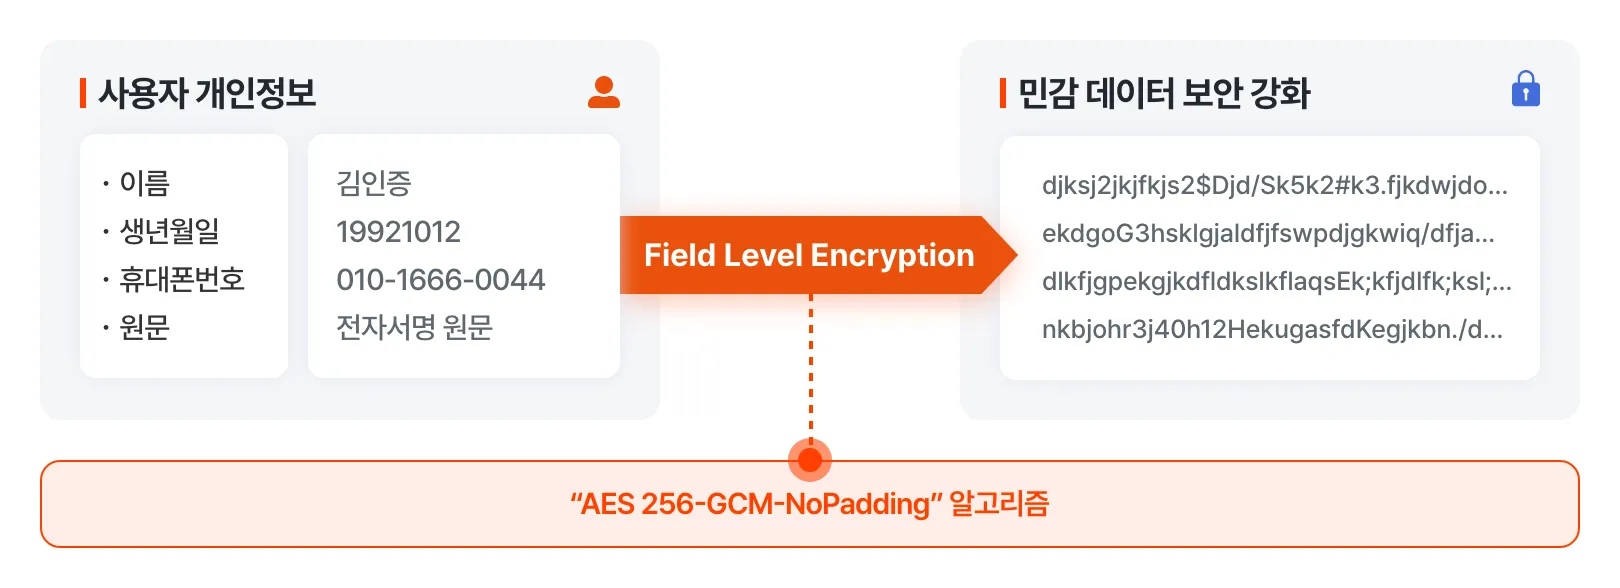 Field Level Encryption 과정